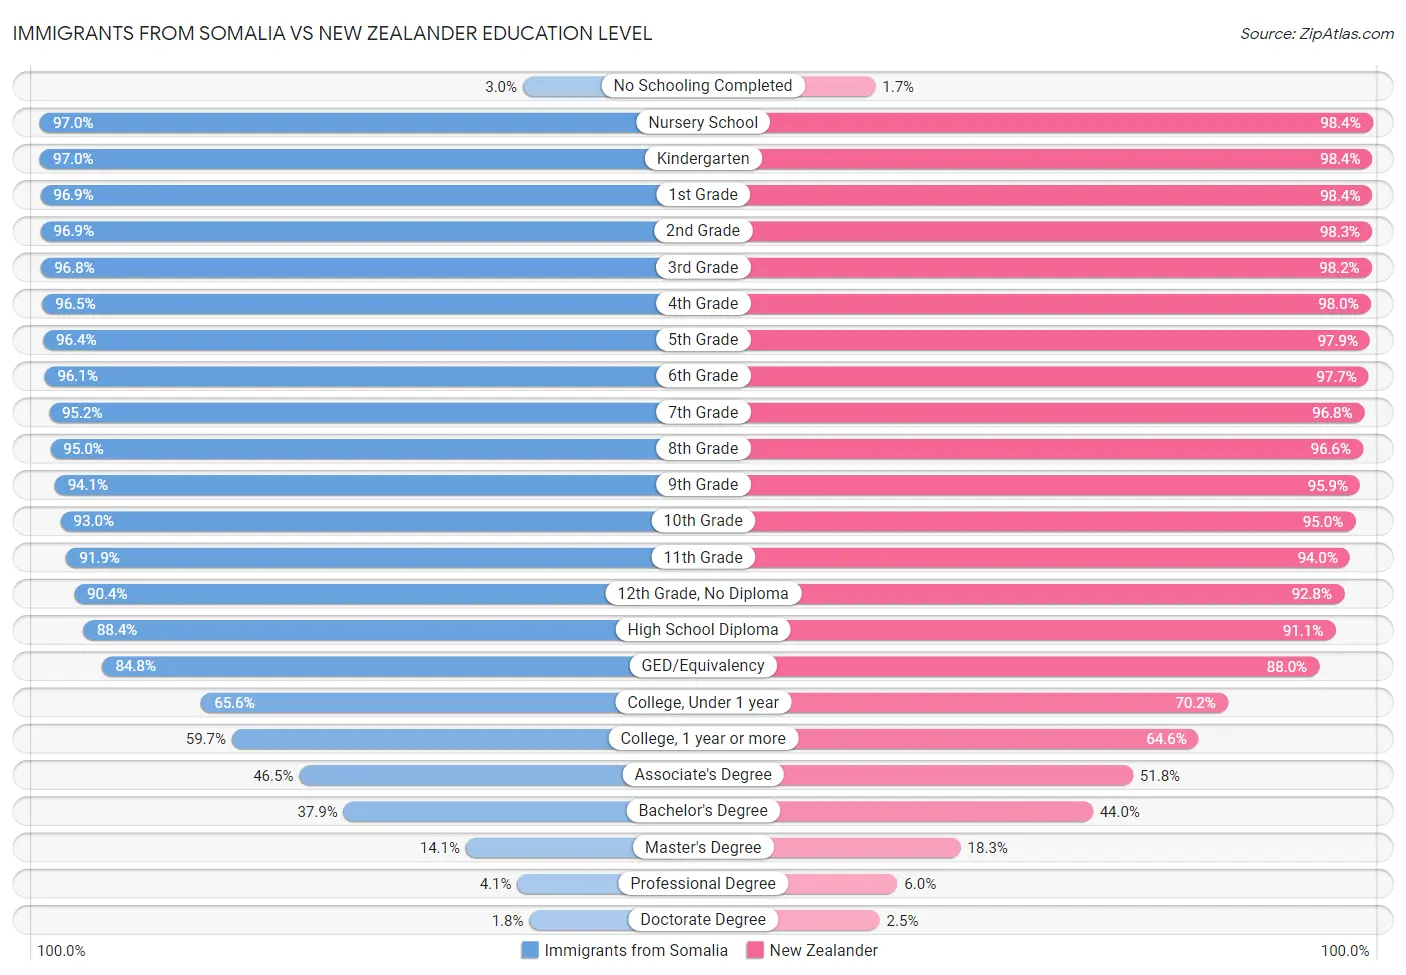 Immigrants from Somalia vs New Zealander Education Level